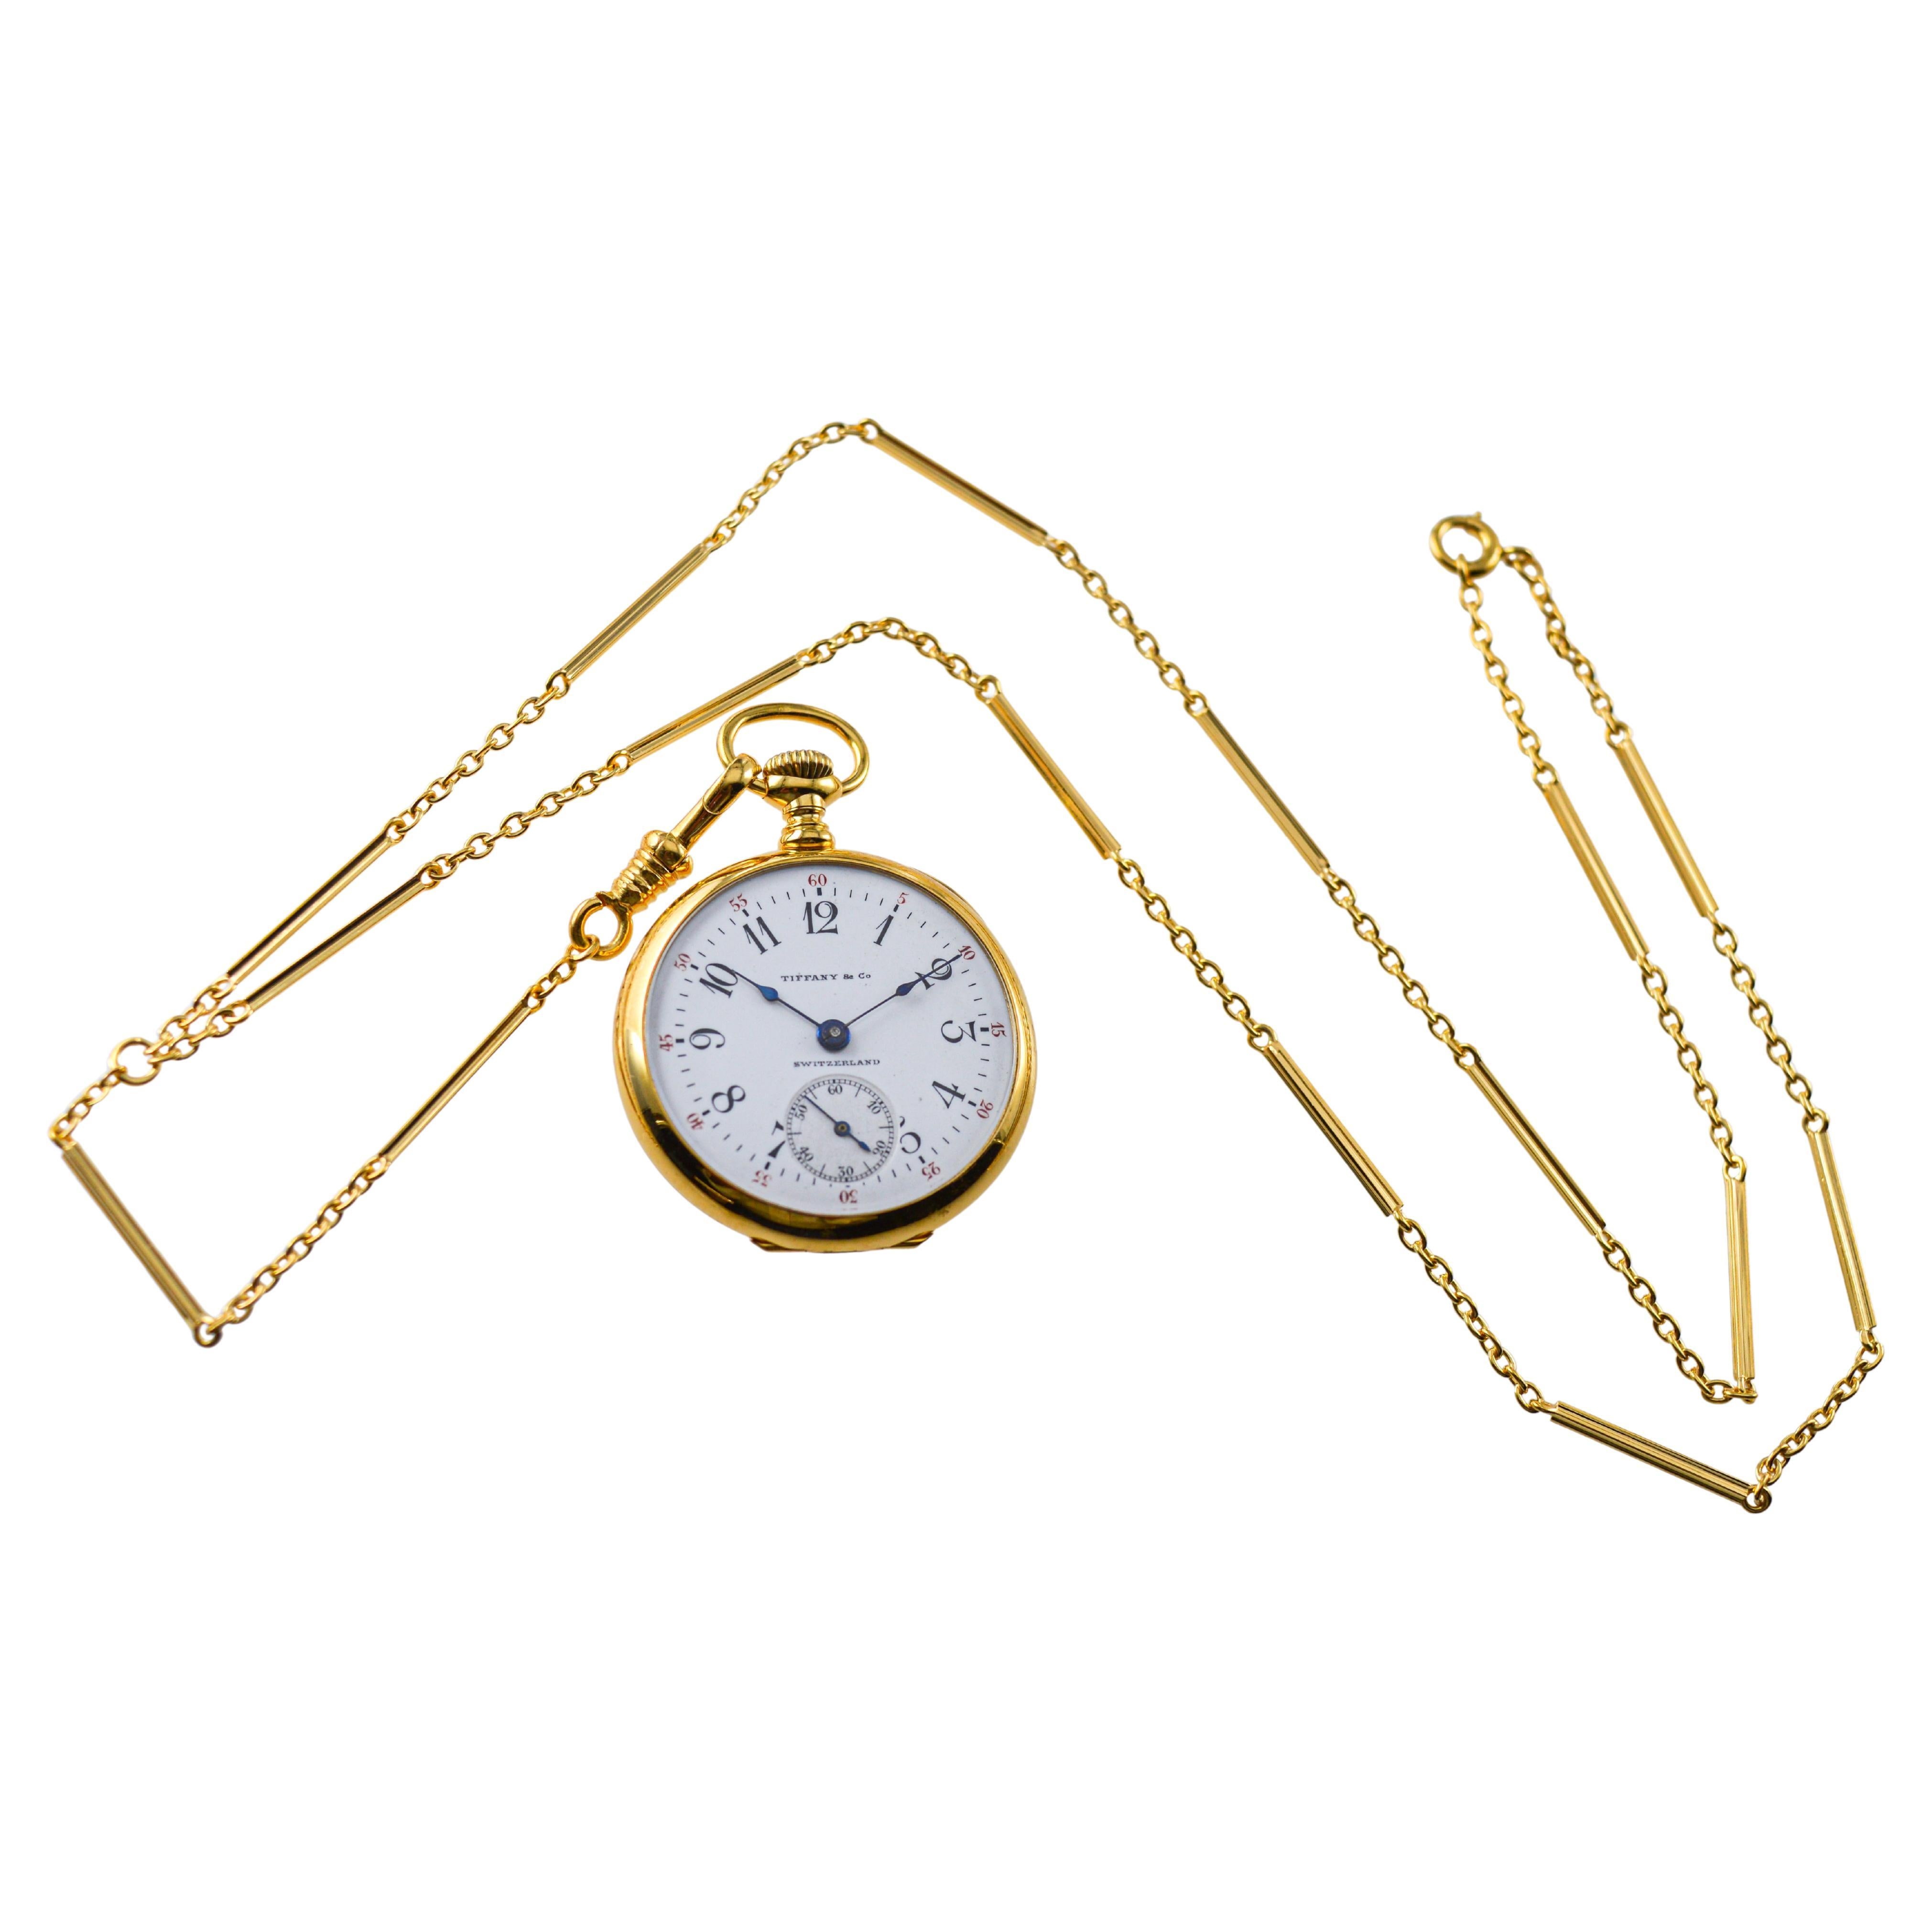 Tiffany & Co Montre pendentif en or 18 carats avec chaîne en or de 1912 et cadran en émail